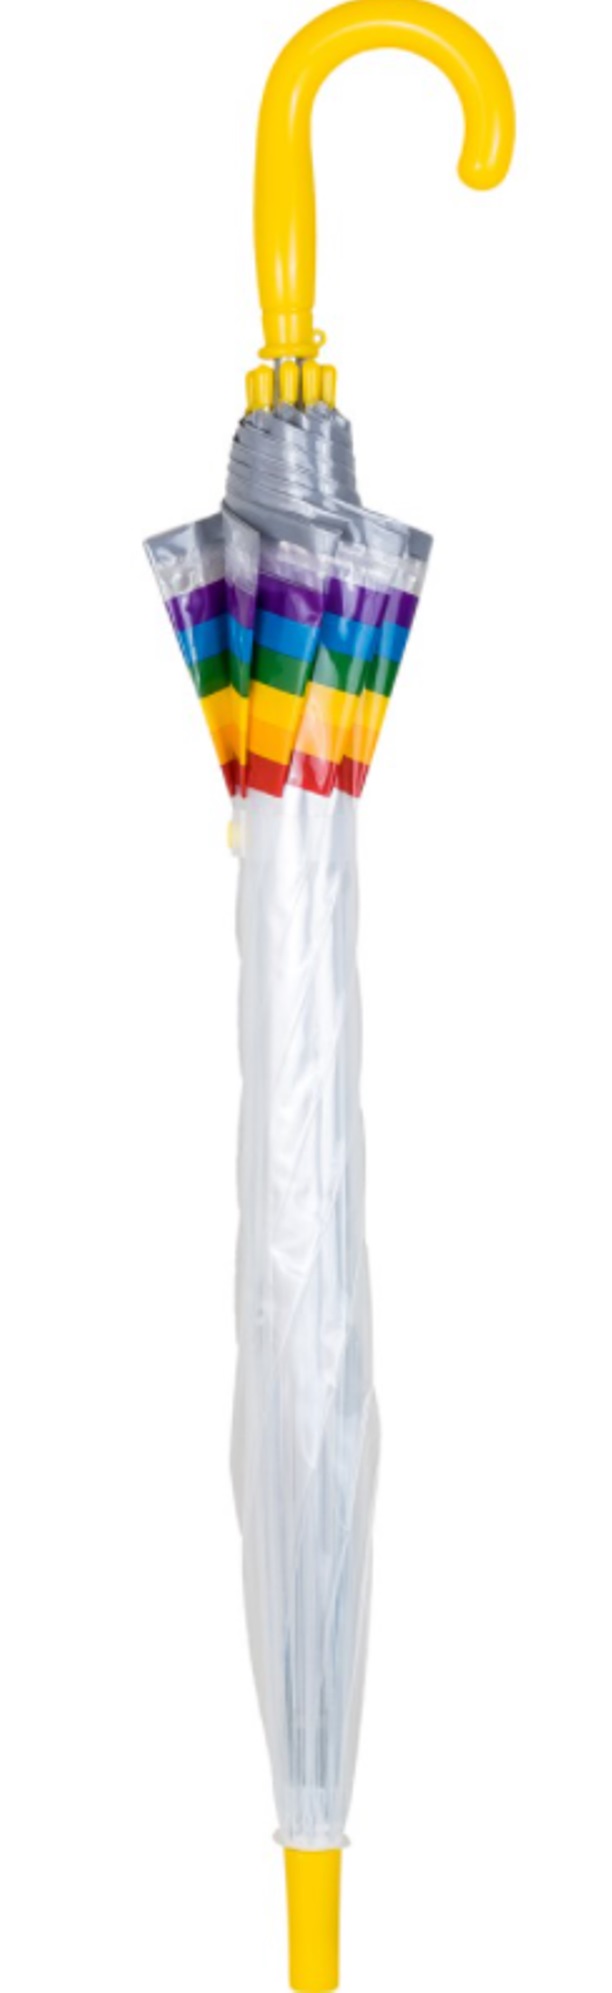 yellow handle rainbow umbrella